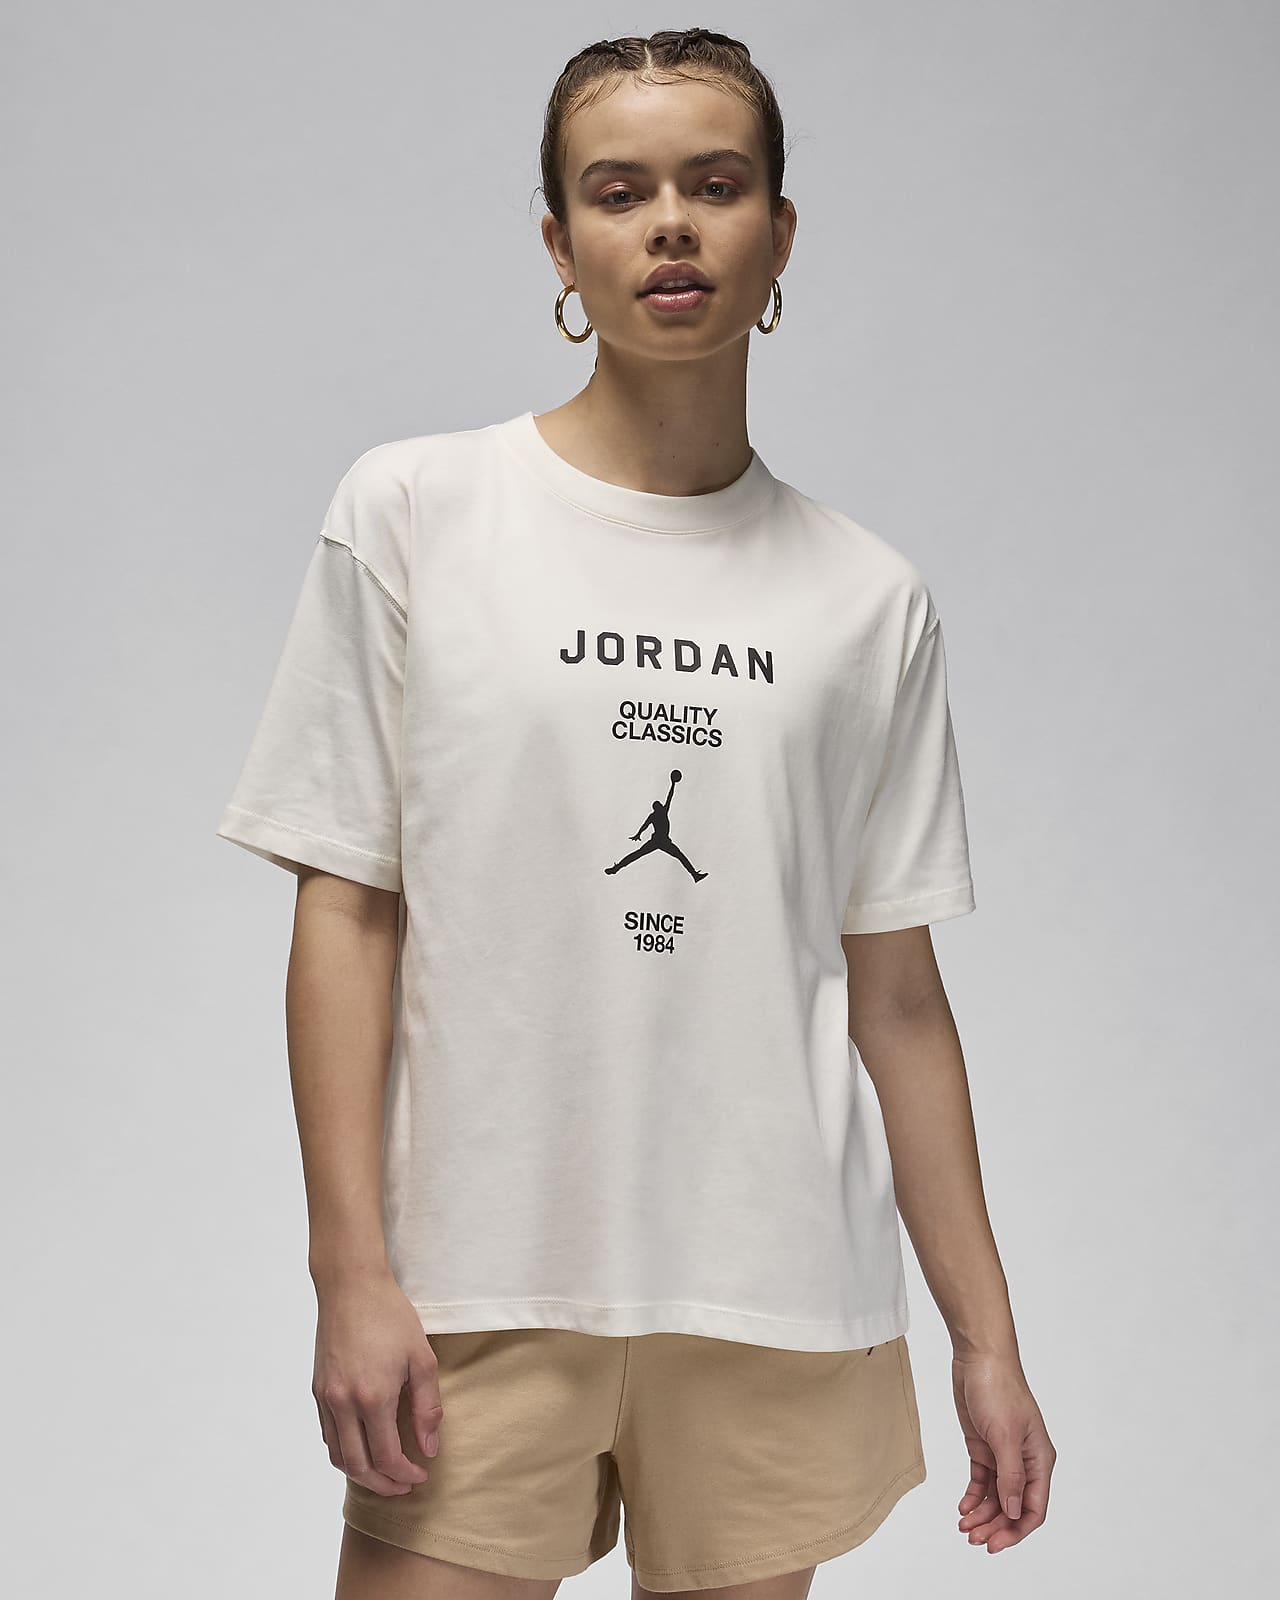 Damski T-shirt o fasonie typu girlfriend Jordan